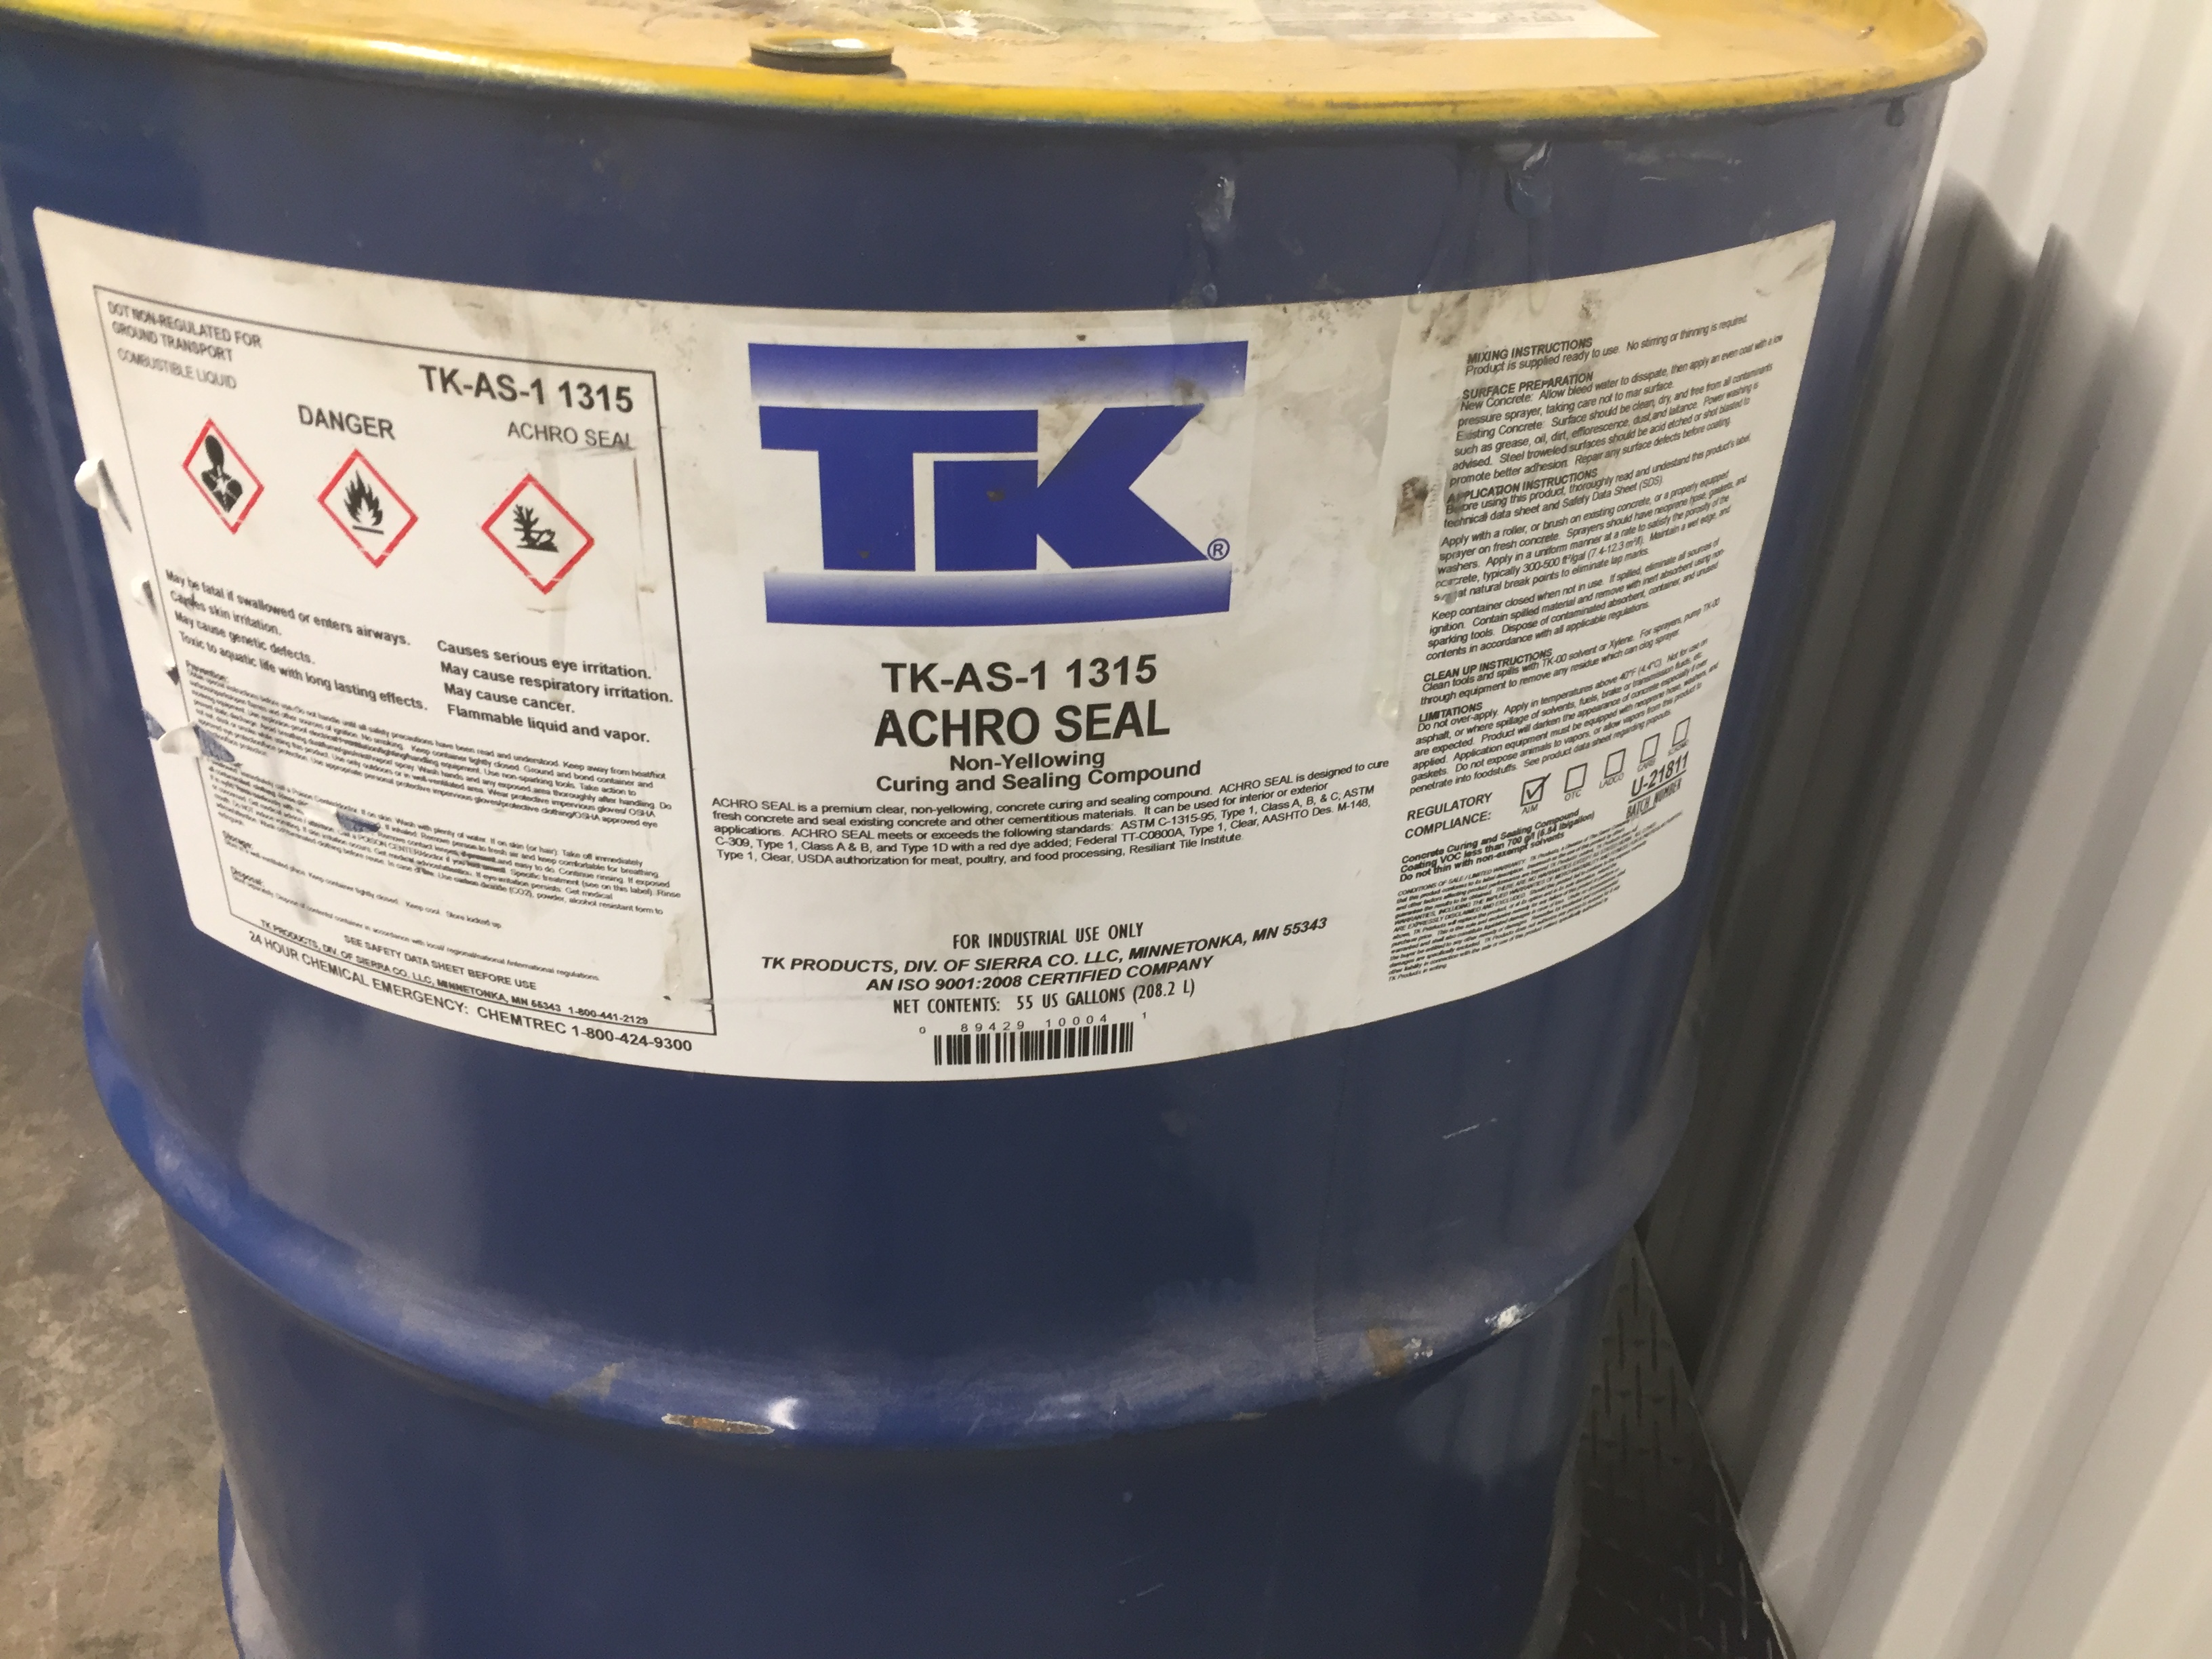 Toxic floor covering label